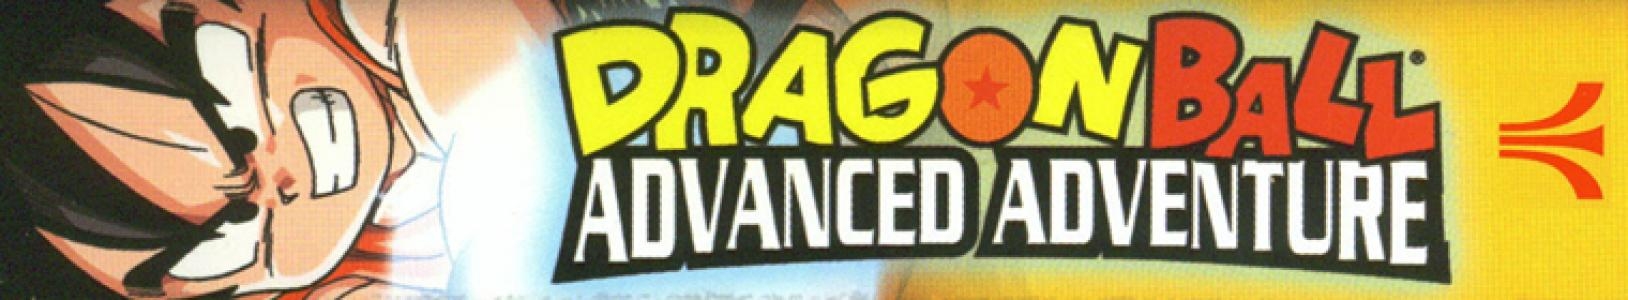 Dragon Ball: Advanced Adventure banner